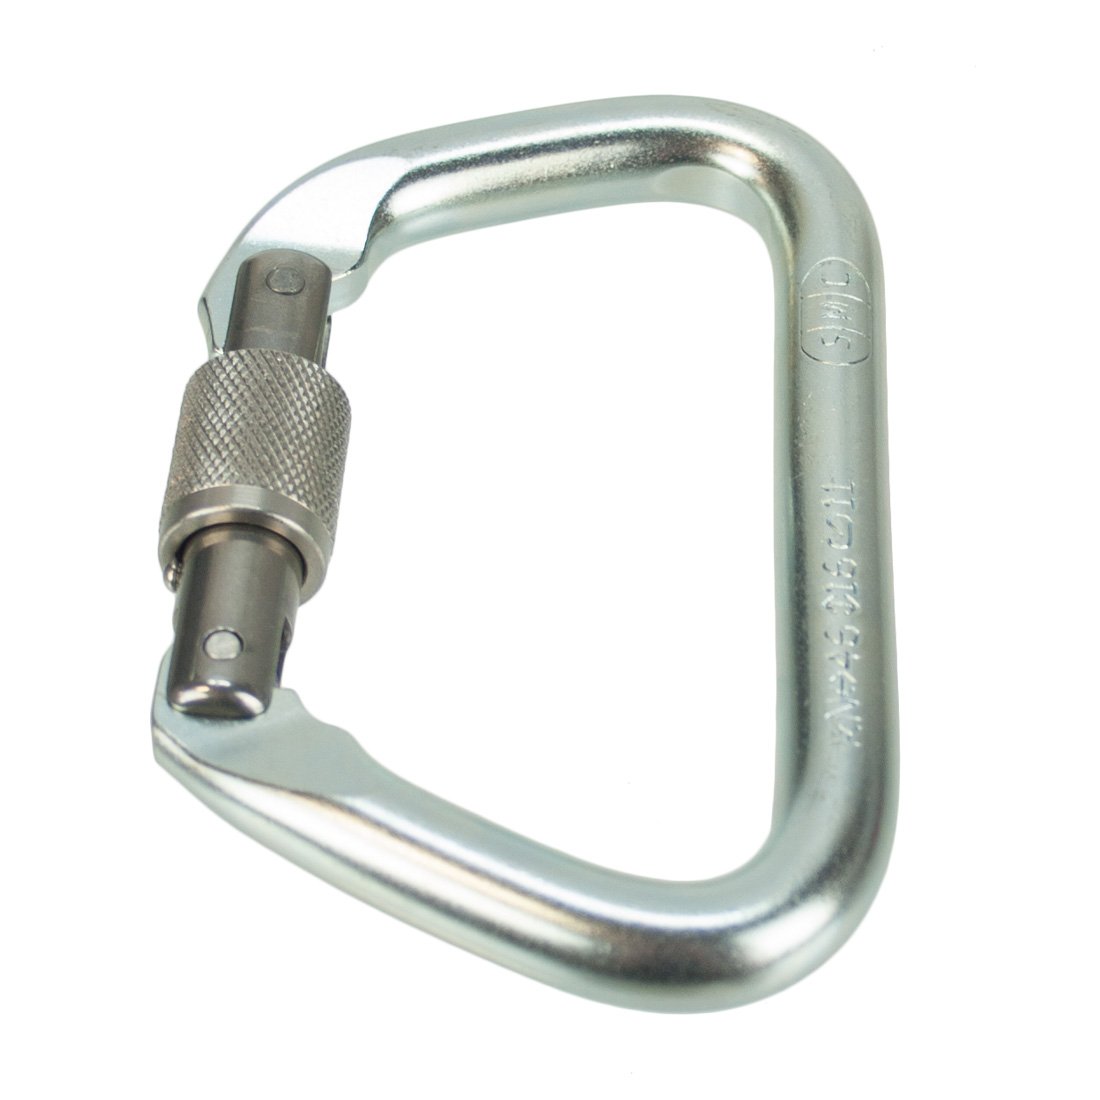 SMC Steel Locking Carabiner - Large - Oblique Bottom View